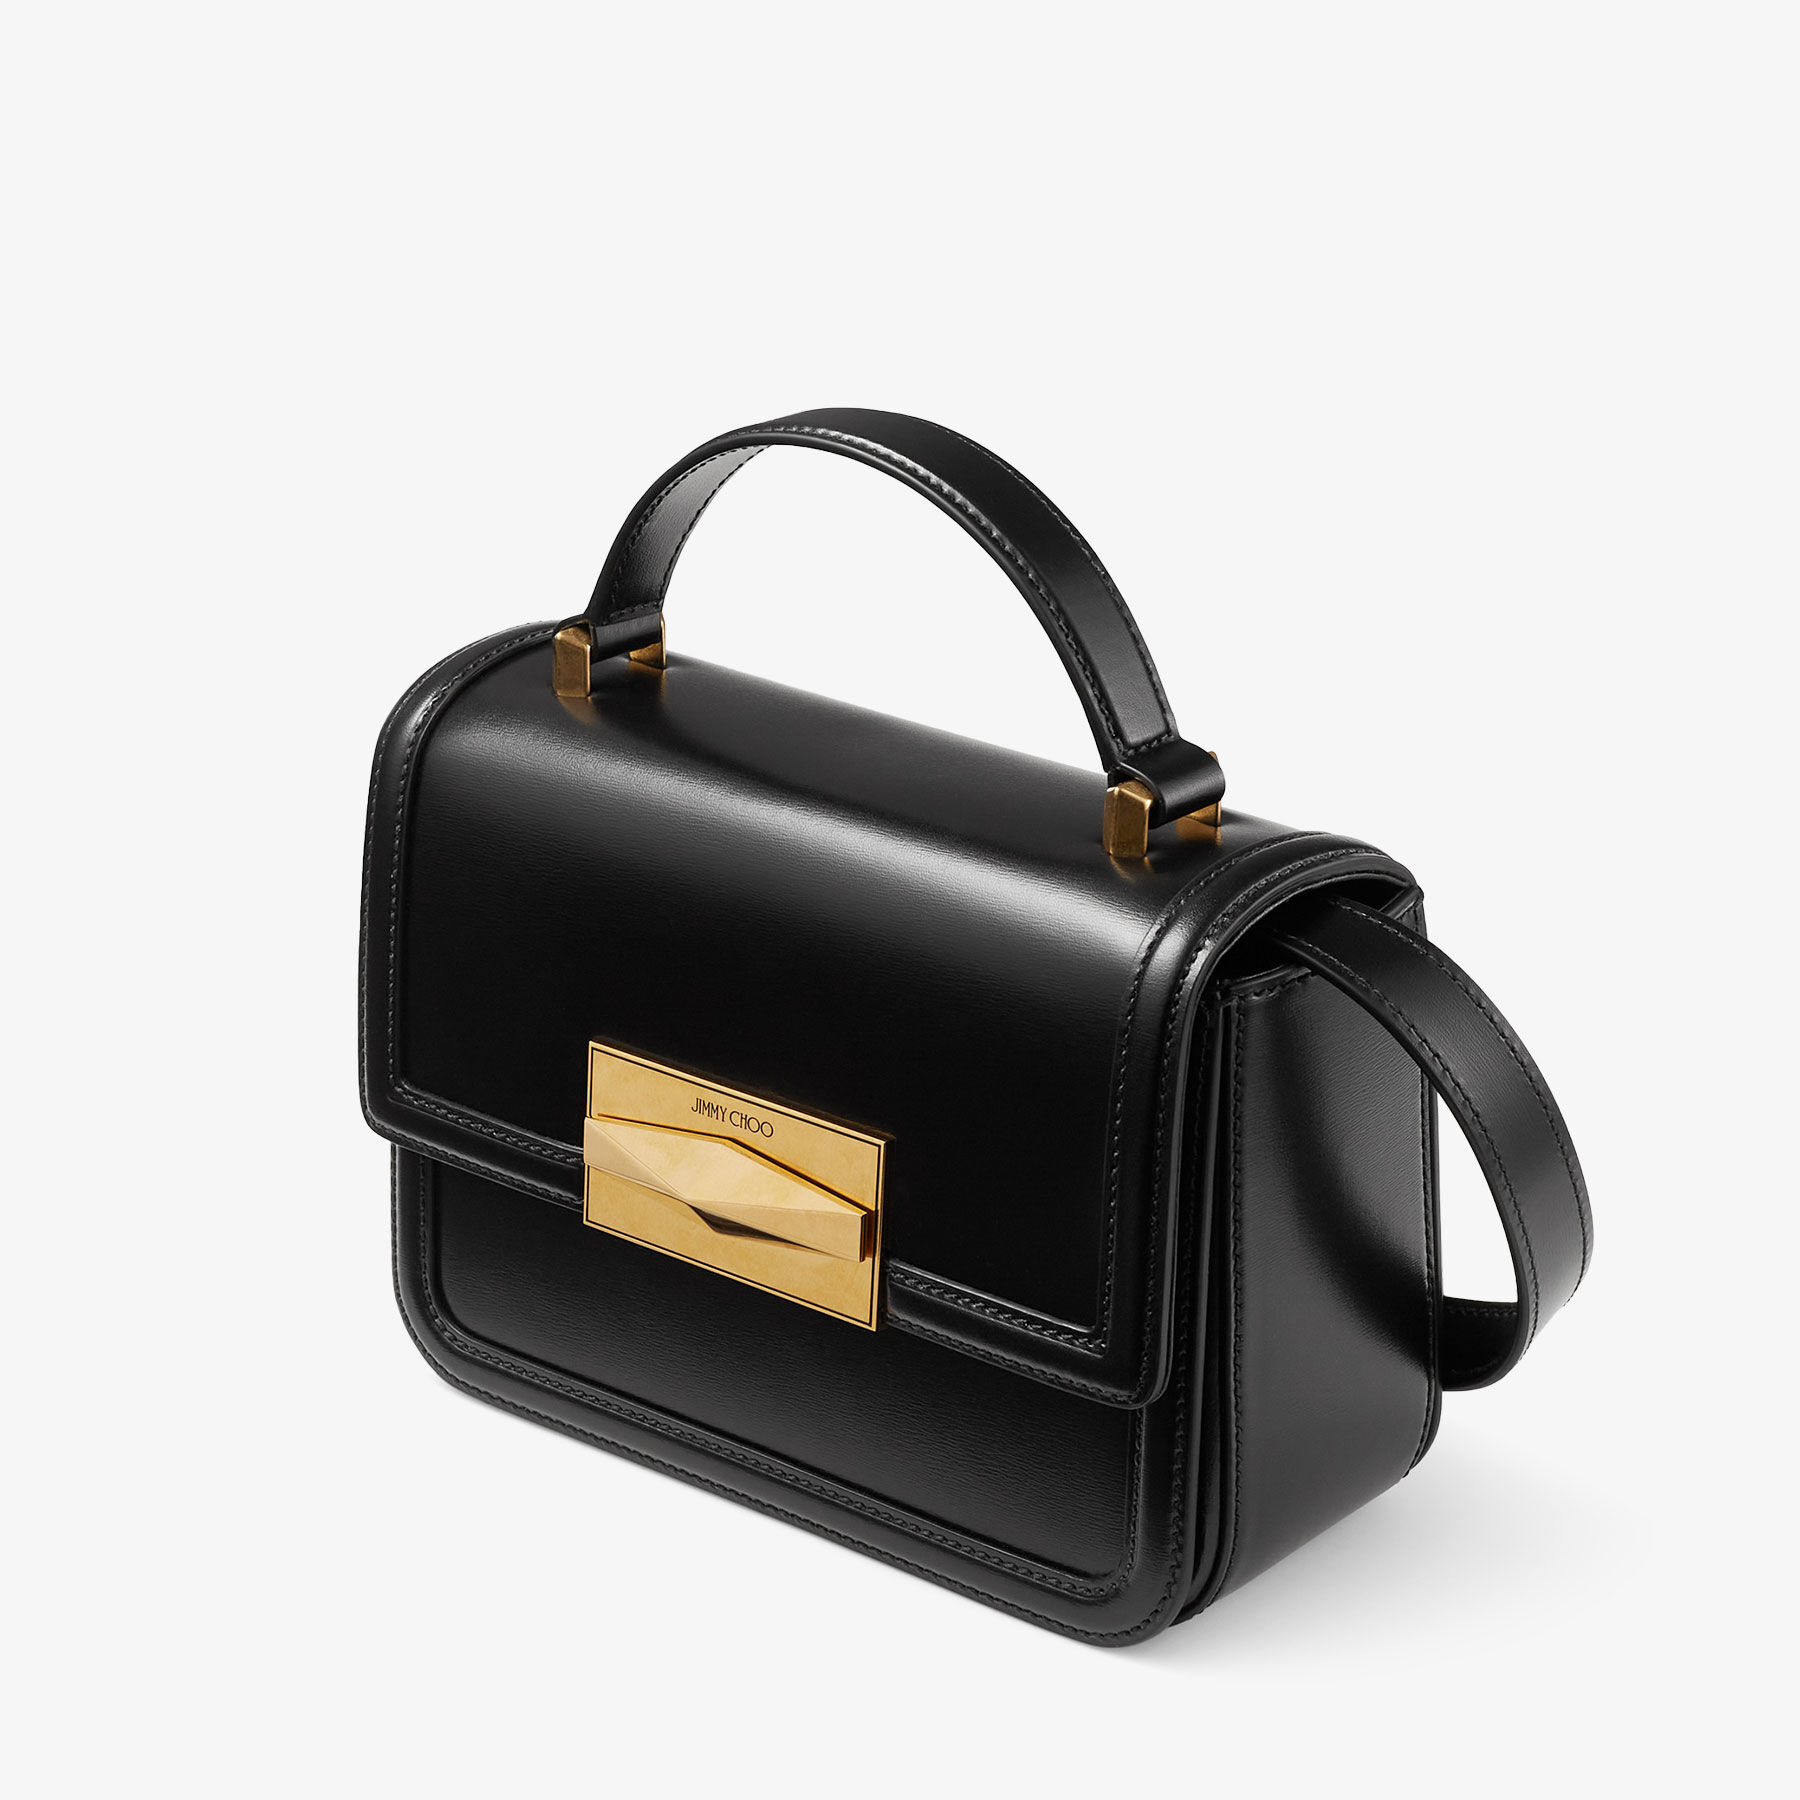 DIAMOND TOPHANDLE | Black Box Calf Leather Top Handle Bag | Autumn 